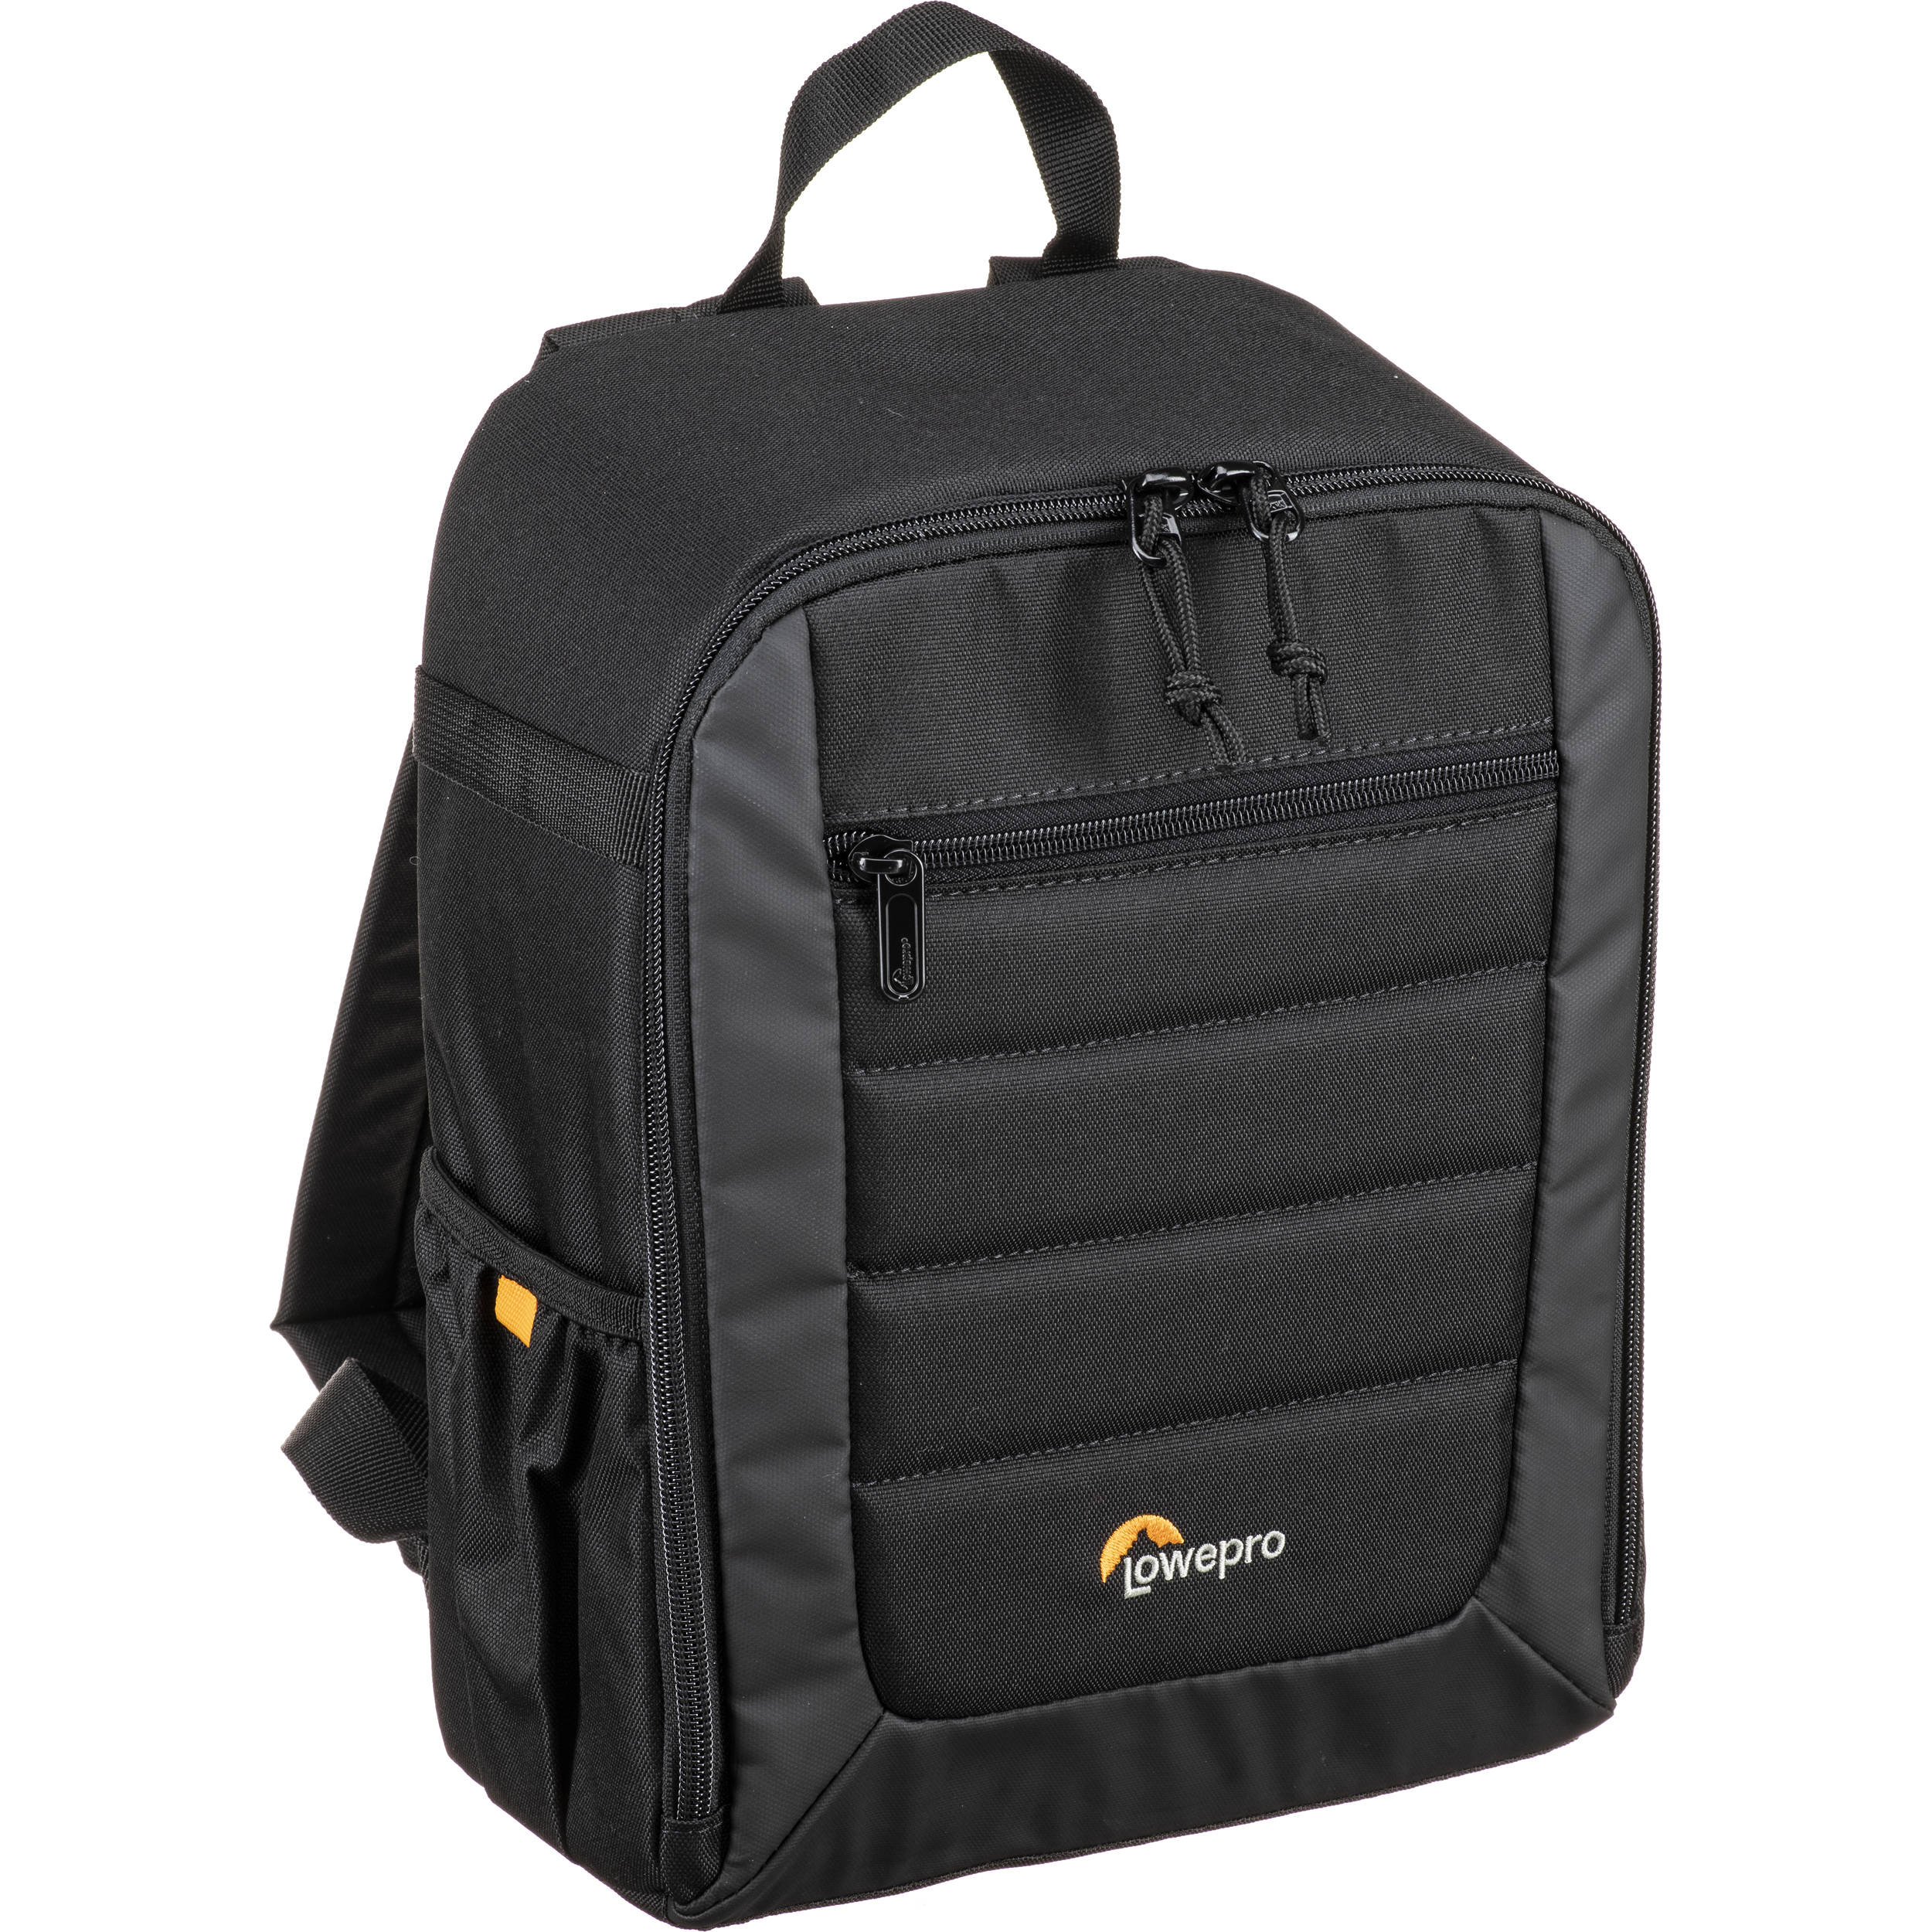 lowepro format 150 camera backpack